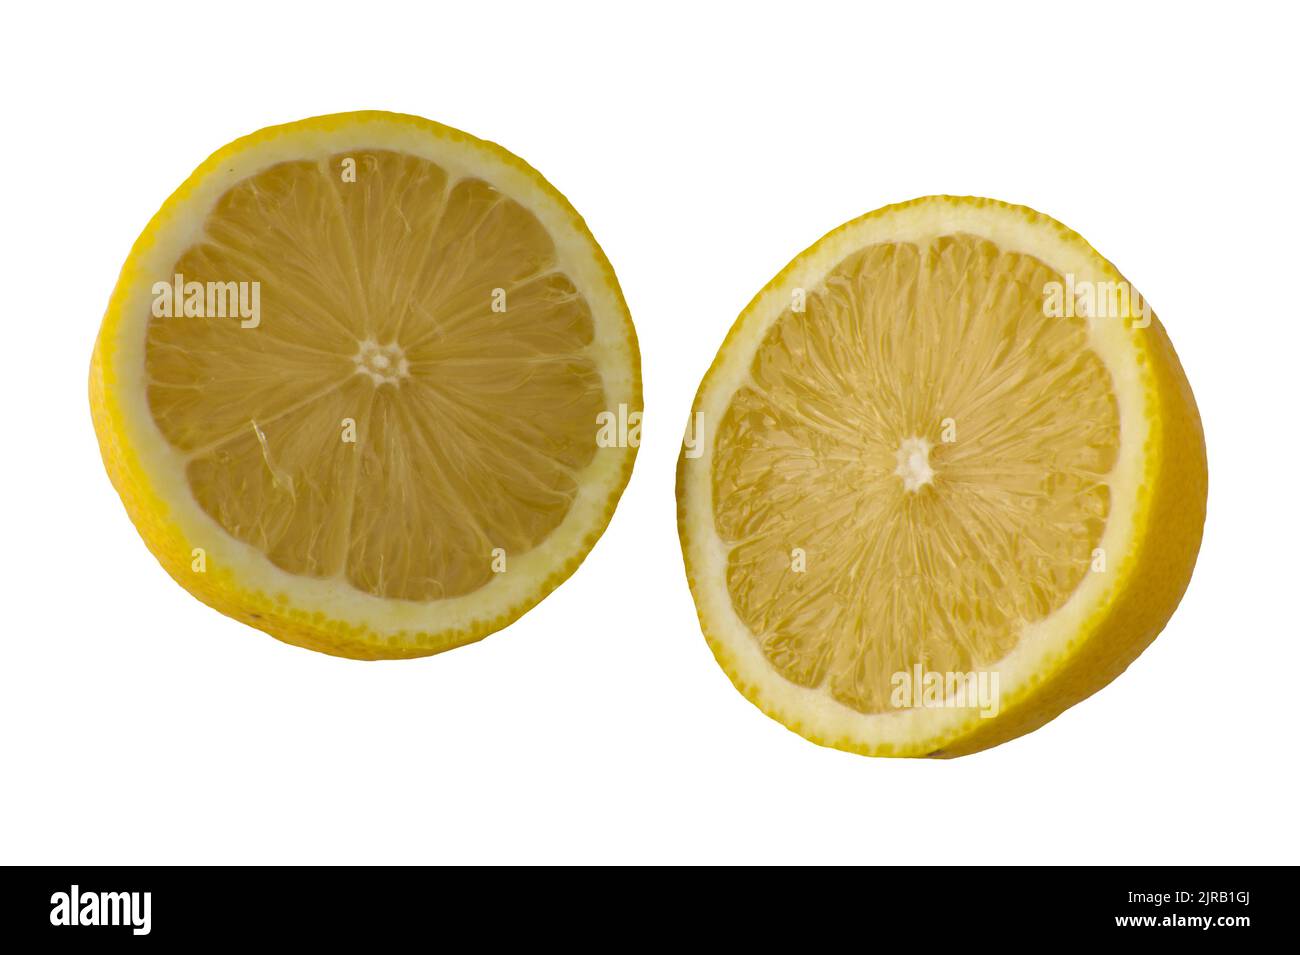 Whole lemon sliced in half. (citrus limon, rutaceae). Isolated on white background. Stock Photo